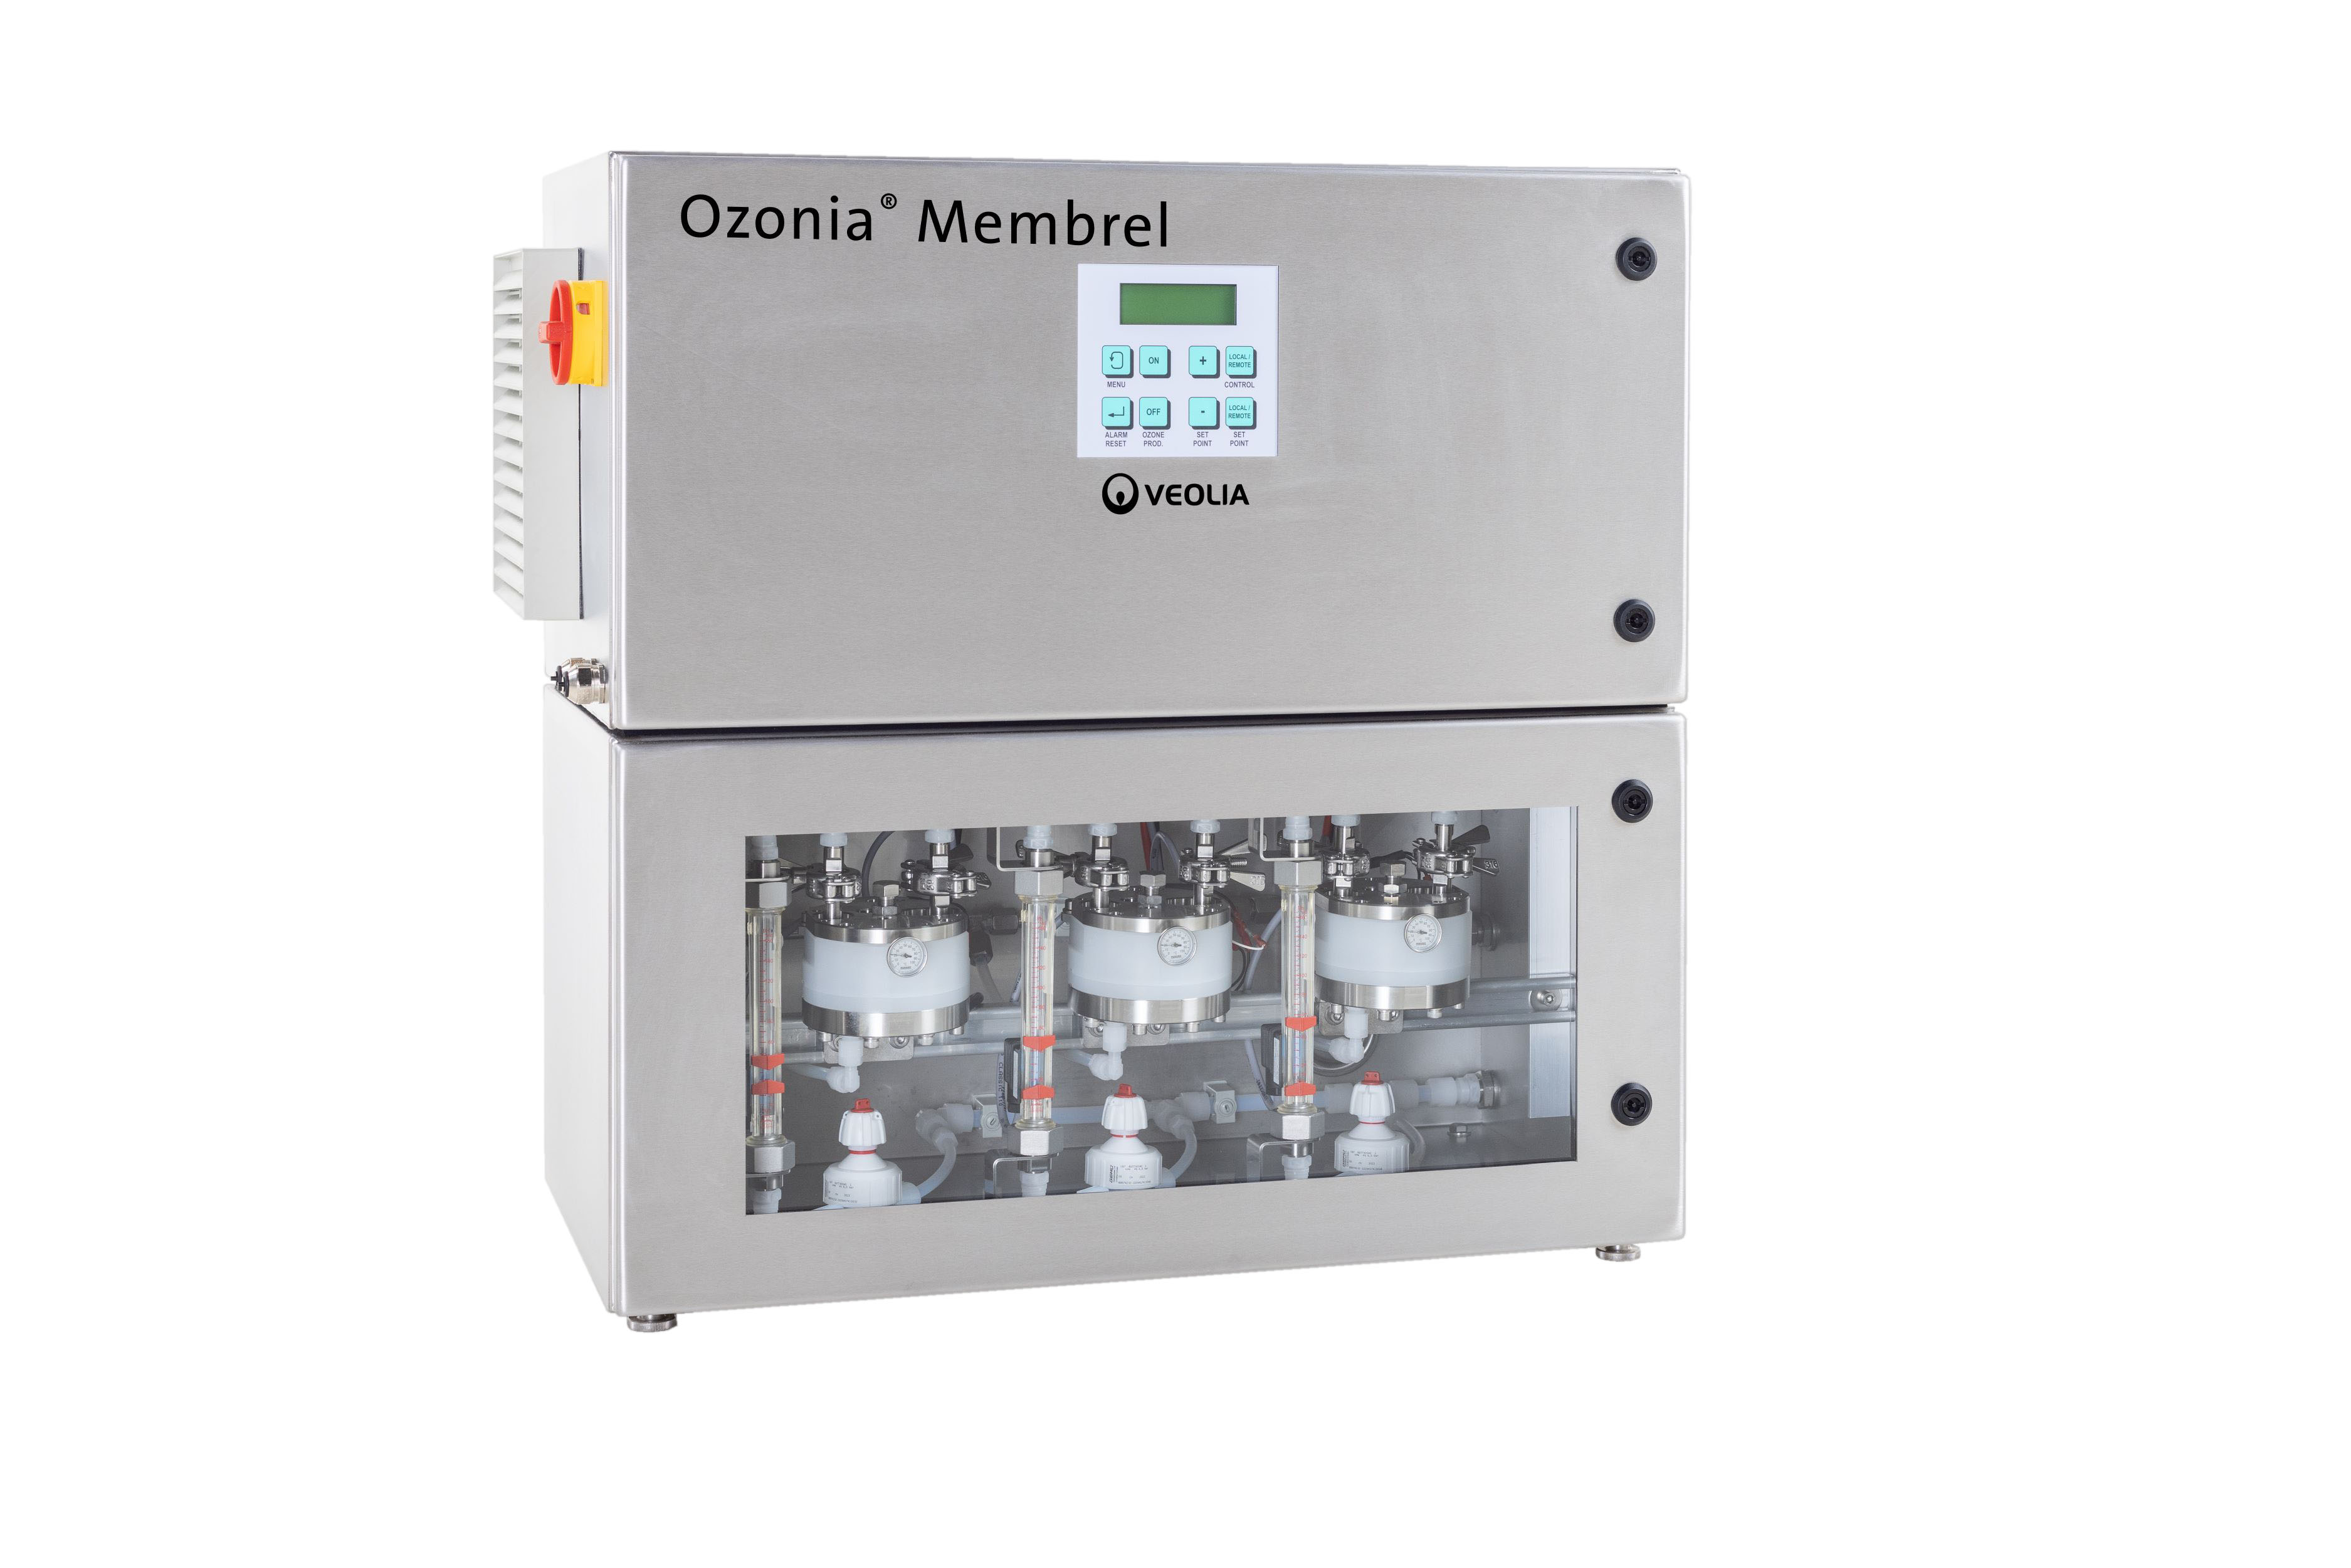 Ozonia Membrel MkV-S-2 - Electrolytic ozone generator, ozone output 2x 3-4 g/h, system unit